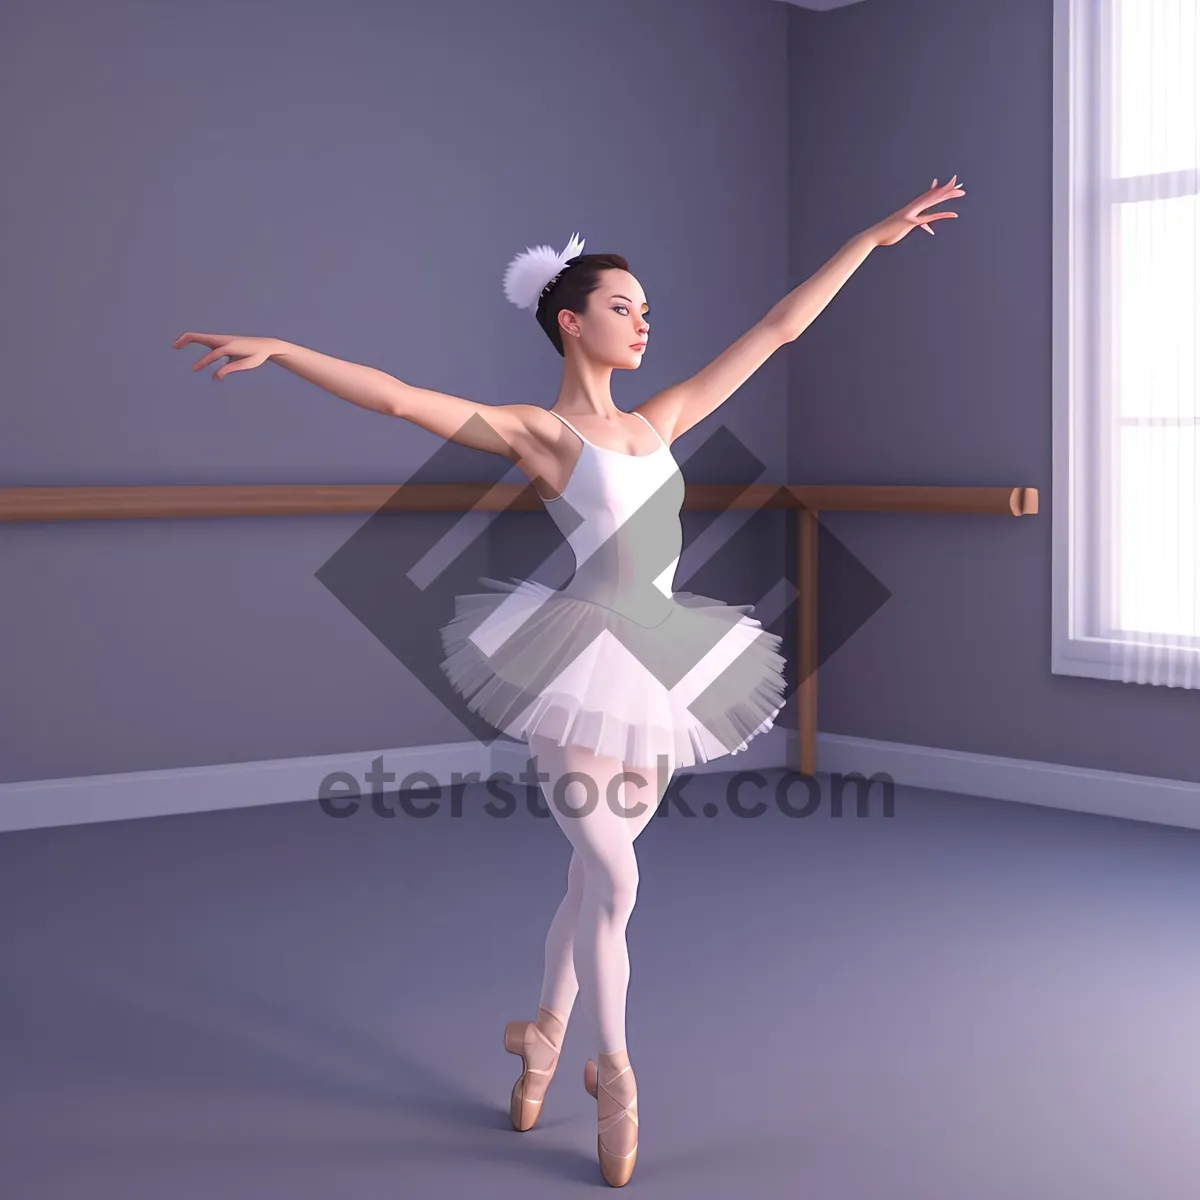 Picture of Elegant Ballerina Gracefully Posing in Studio